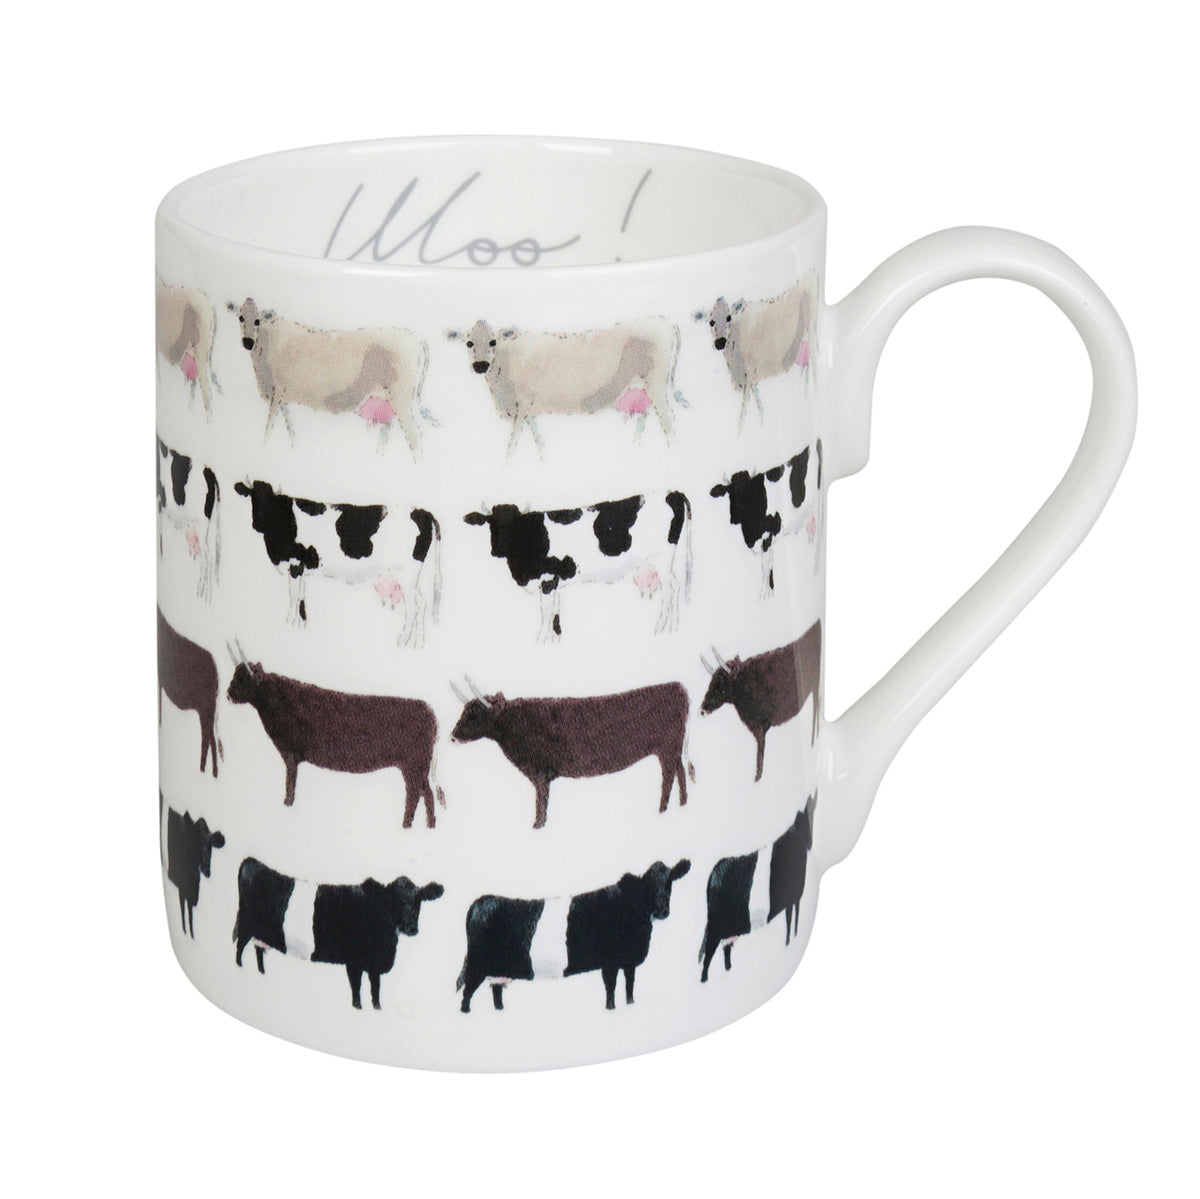 Cows 'Moo!' Mug